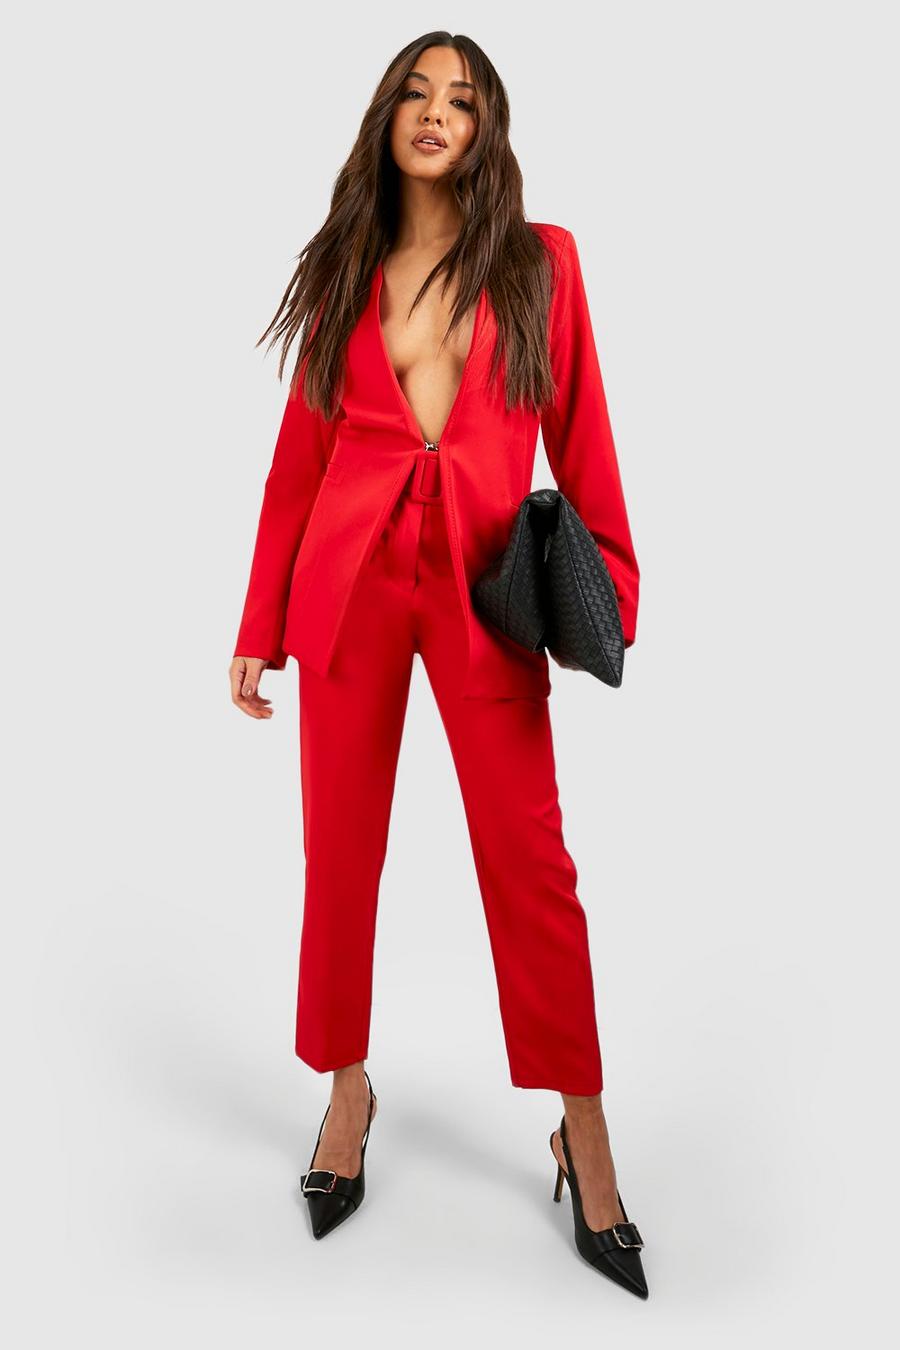 Red Formal Two Piece Suit, Blazer Trousers Set, Bell Bottoms for Tall Women  , Wedding Guest Suit, Graduation Suit Set, Bridesmaid Suit -  Norway